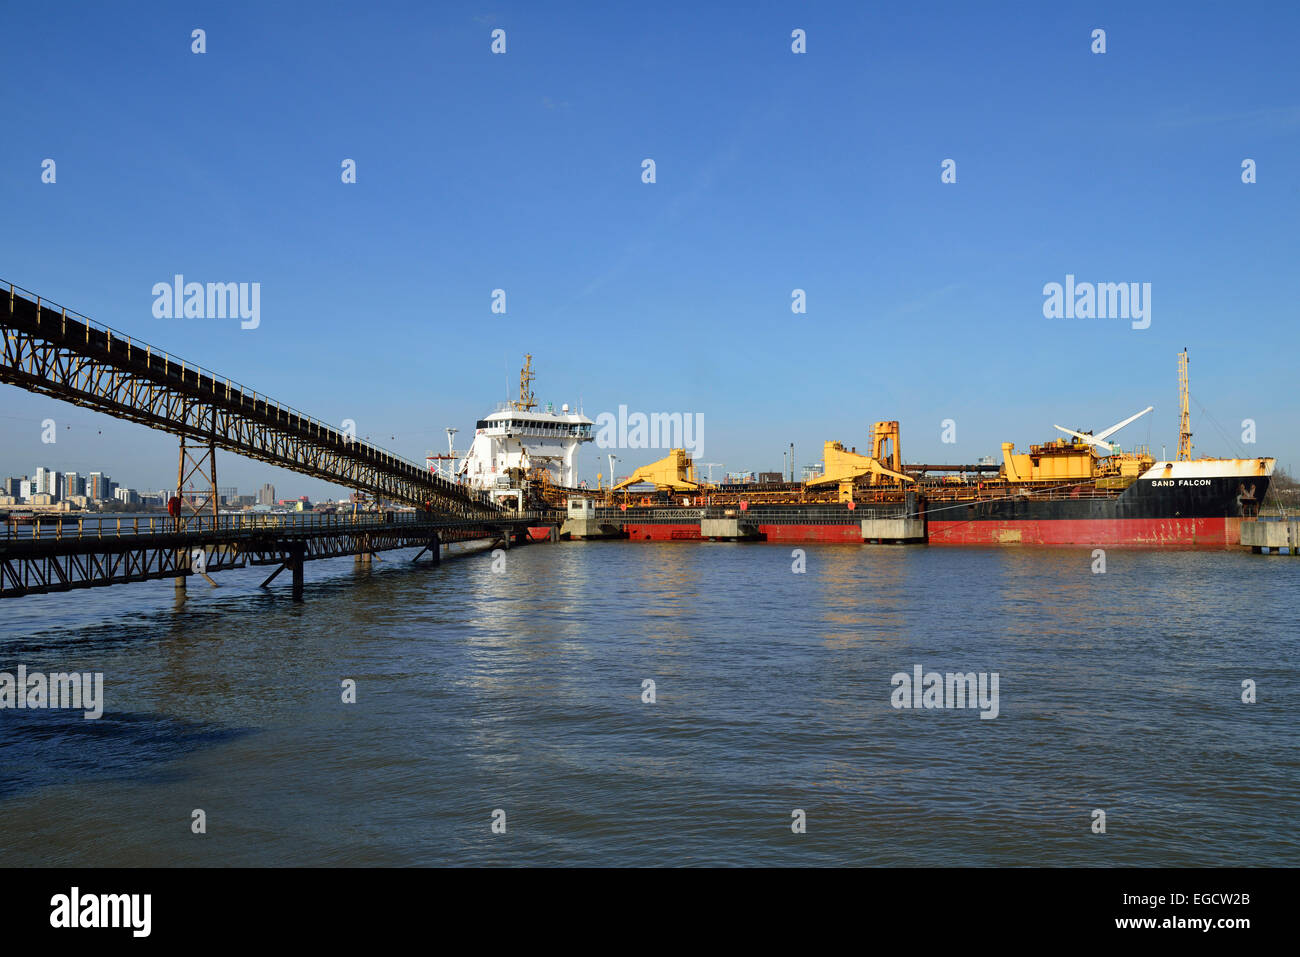 Sand Falcon Cargo ship loading, Thames River, London, United Kingdom Stock Photo